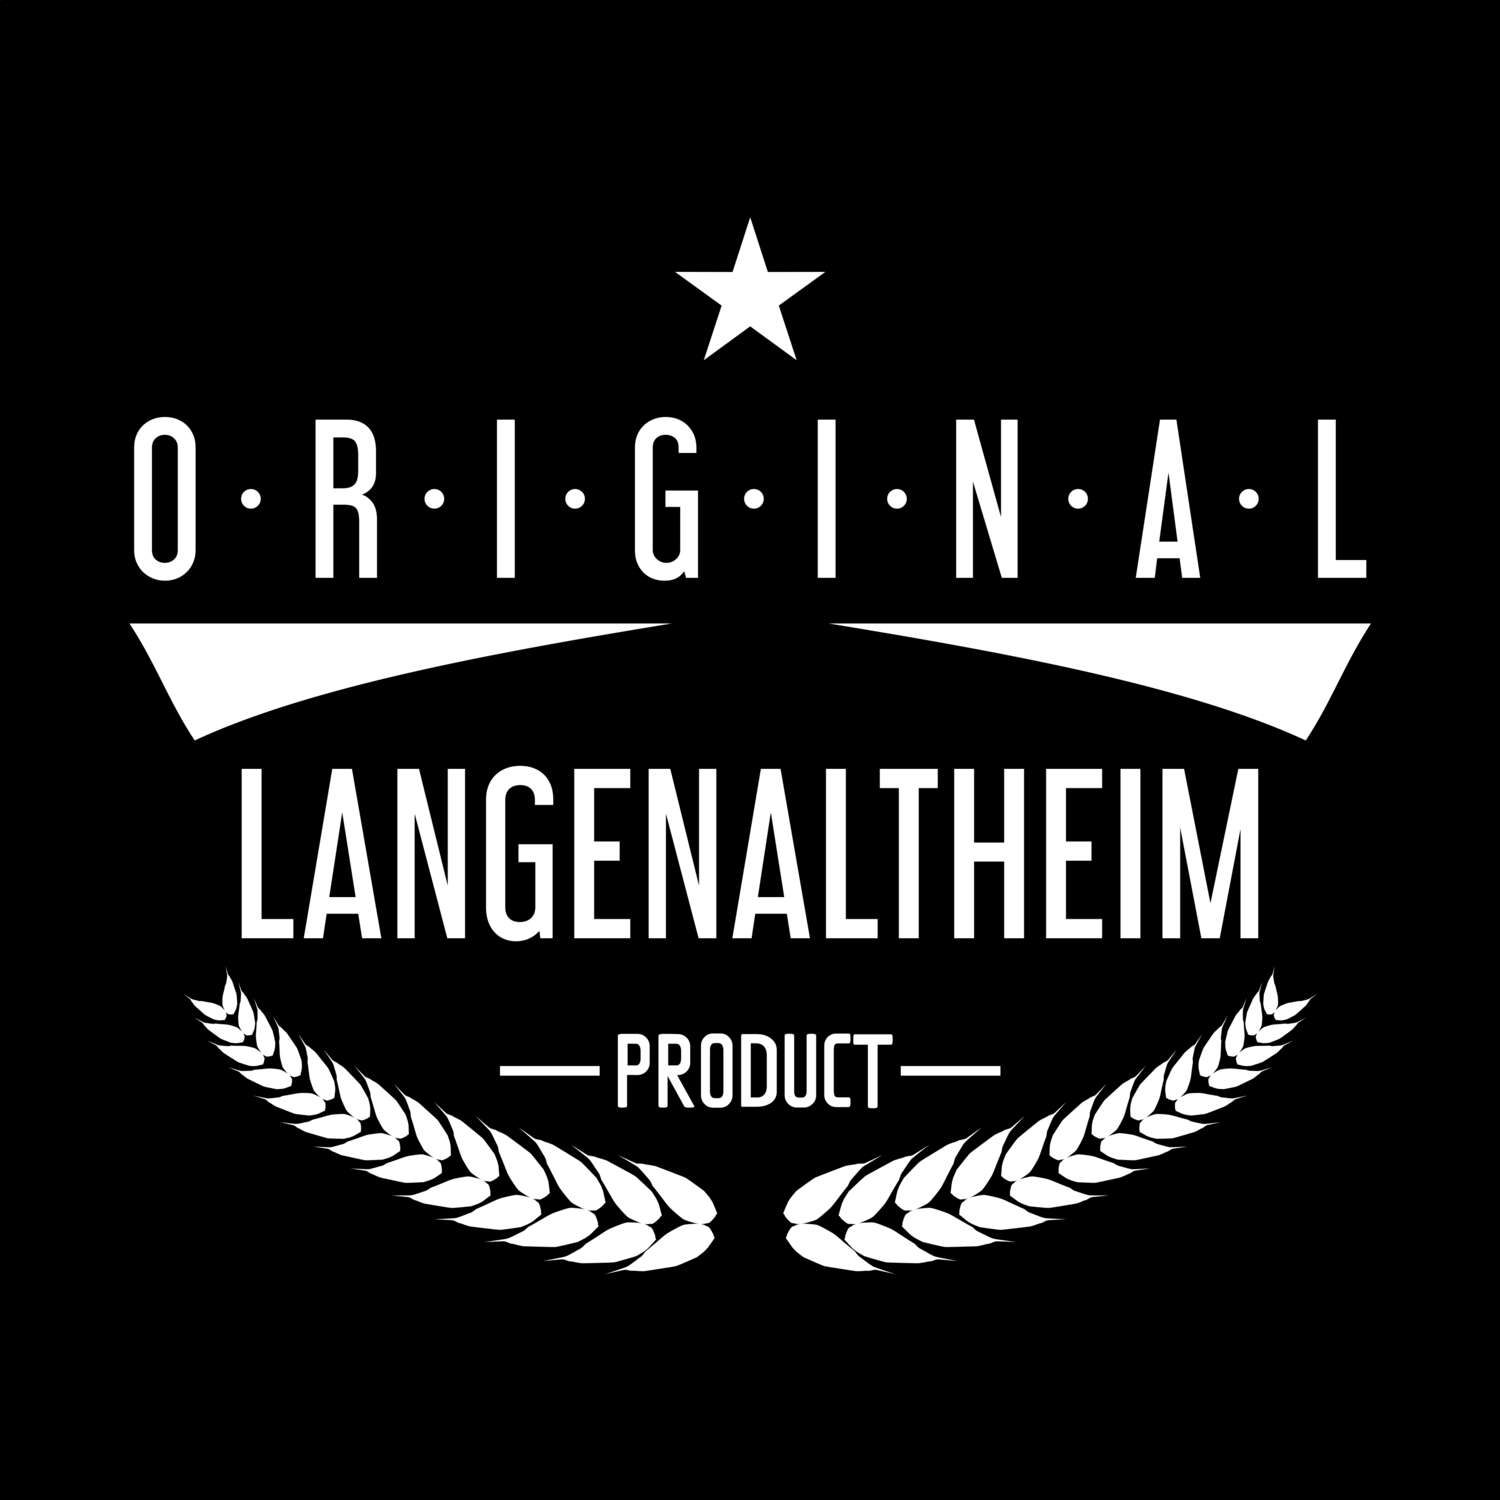 Langenaltheim T-Shirt »Original Product«